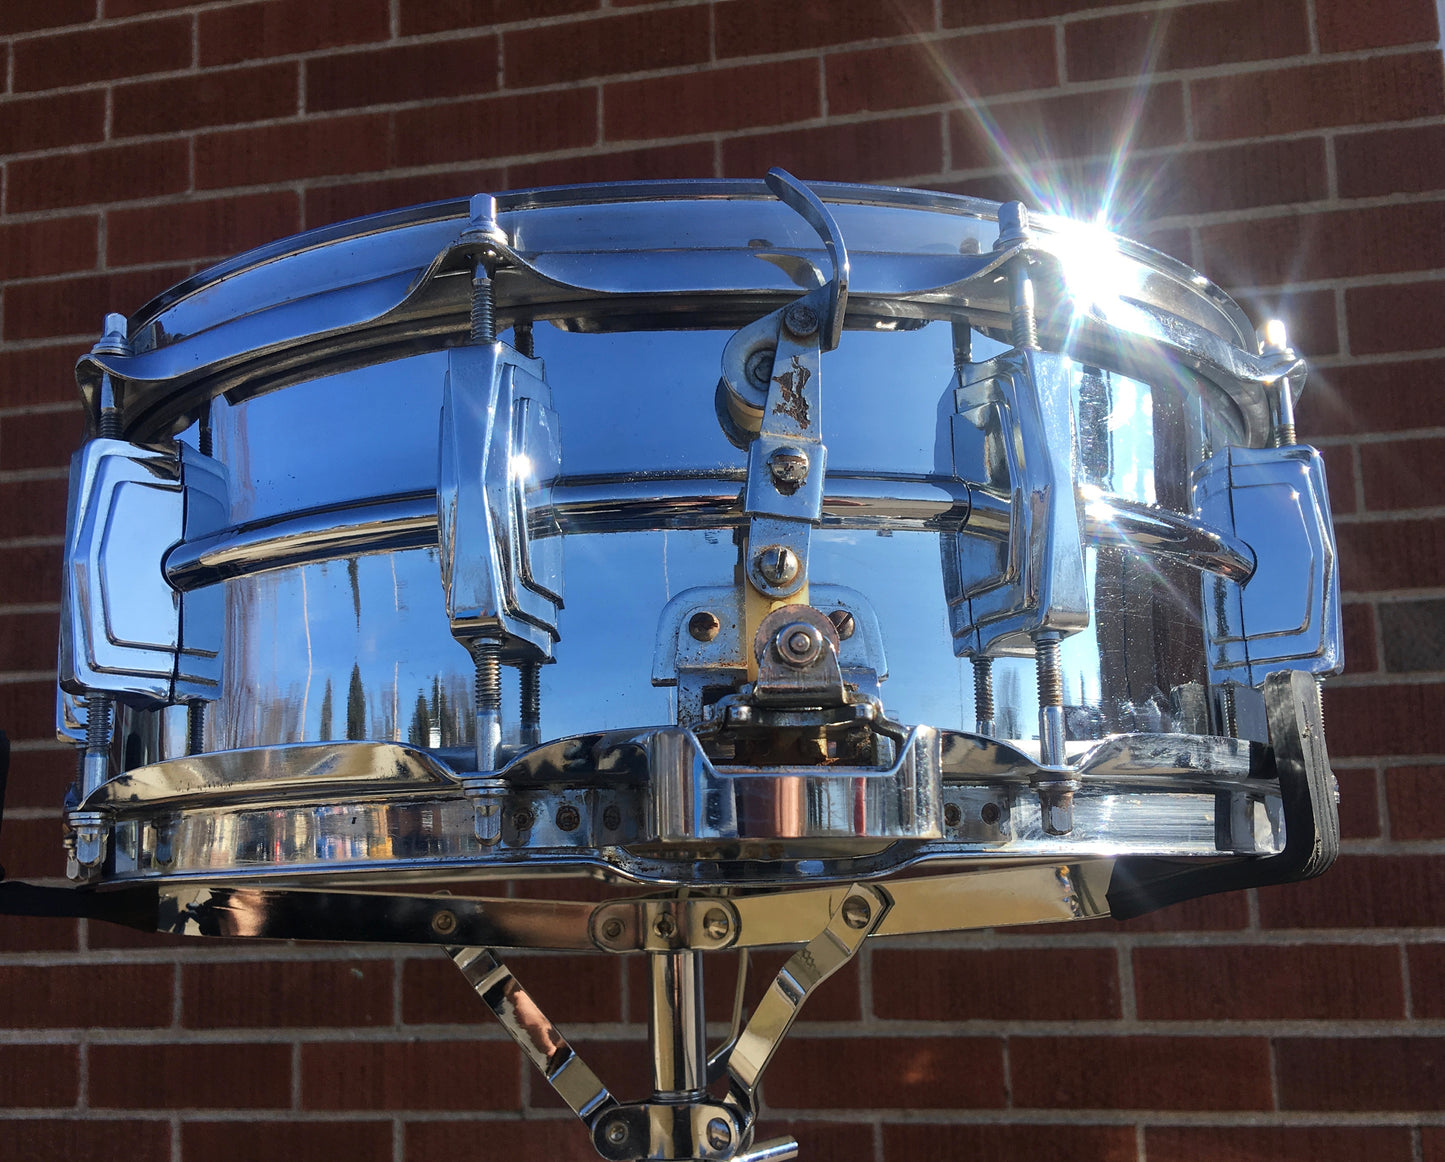 1960's Ludwig Super Sensitive Keystone Snare Drum 5x14